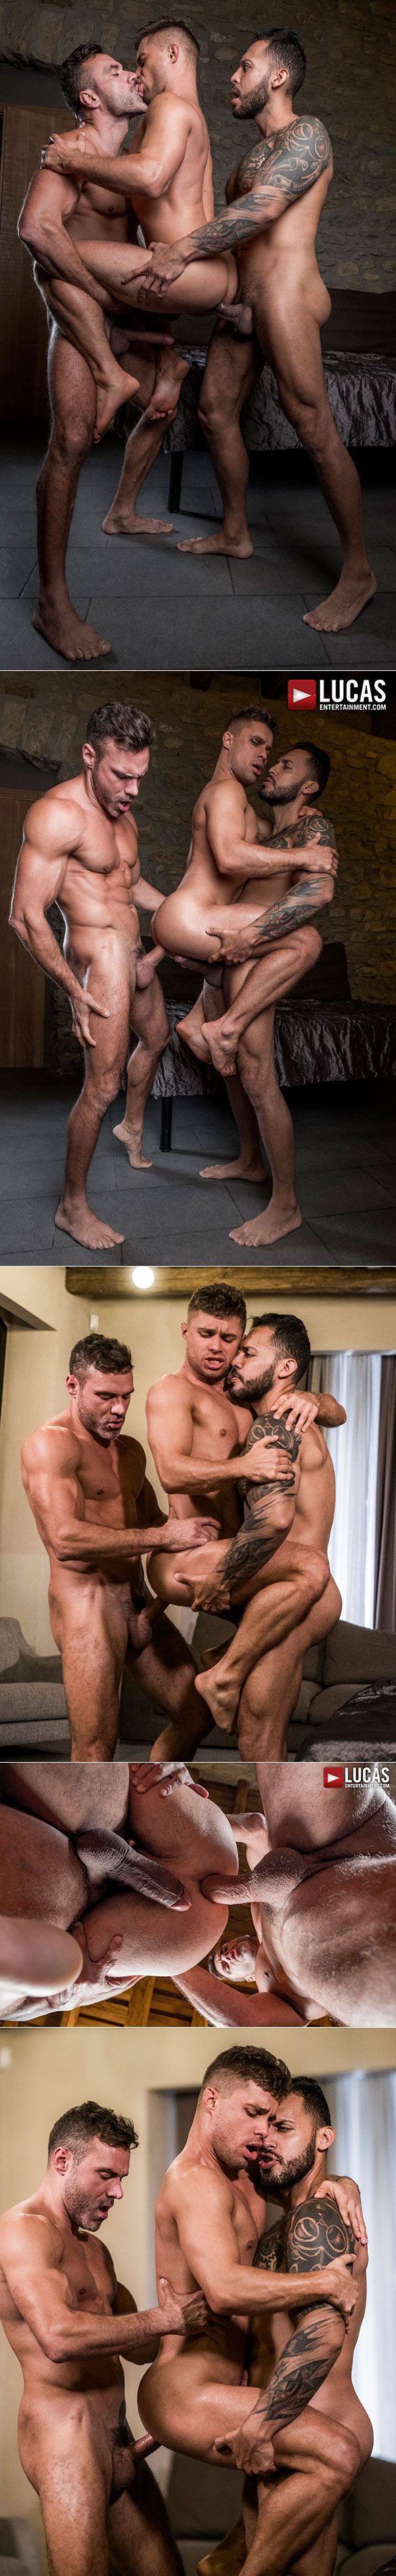 Lucas Entertainment: Viktor Rom and Manuel Skye tag team Klim Gromov in "Craving Raw Dick"